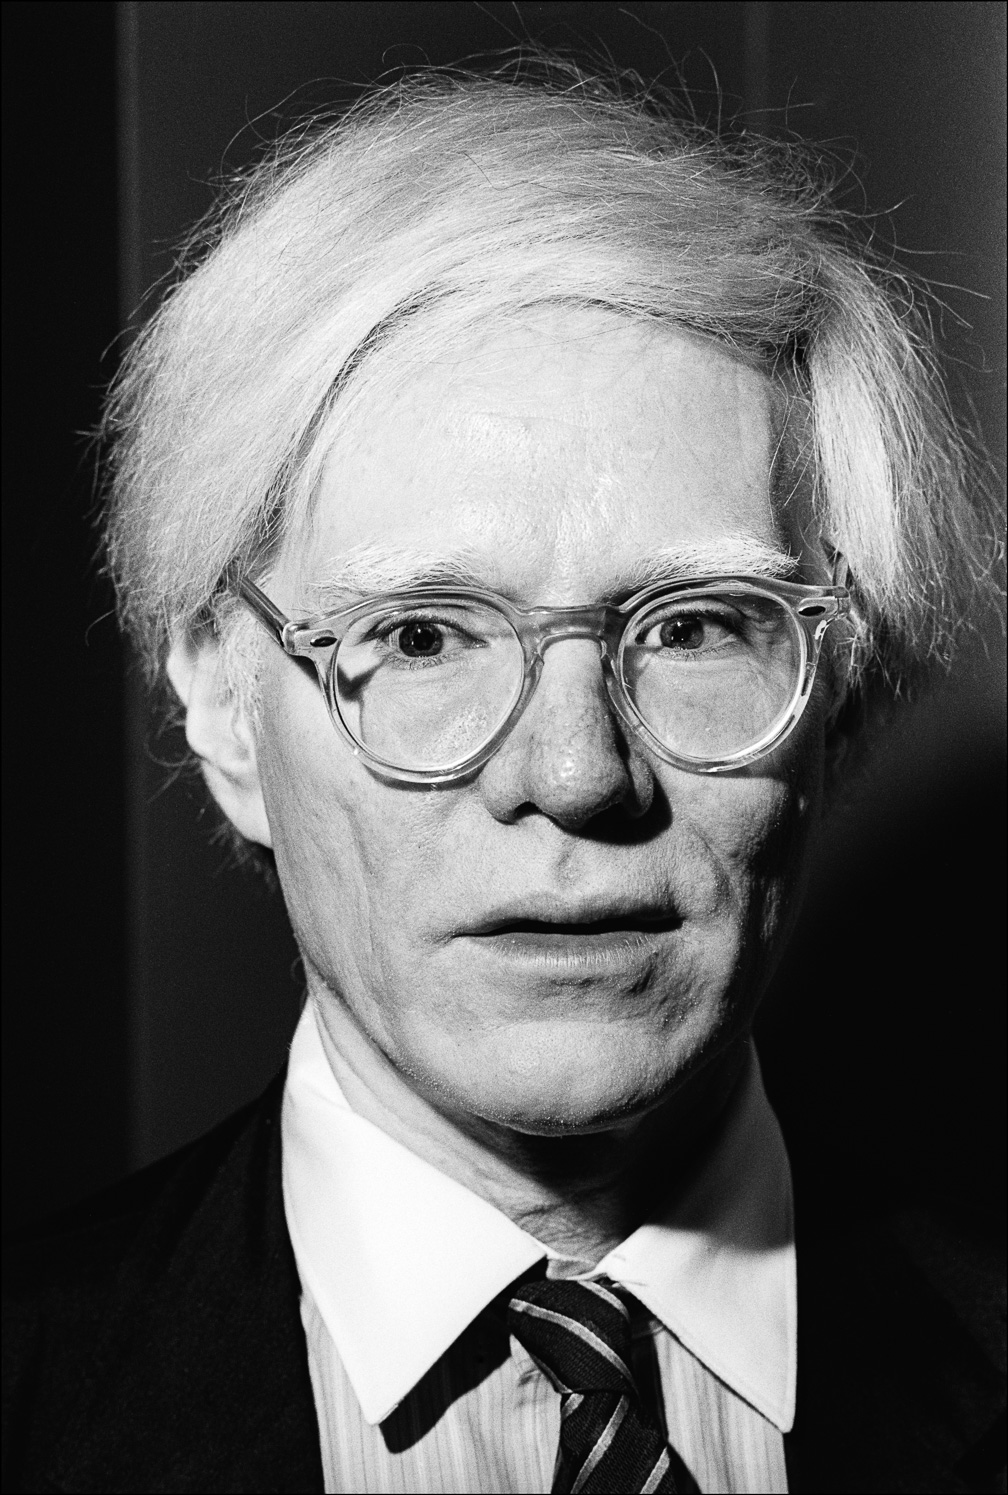 Andy Warhol 'Bad Timing Party'